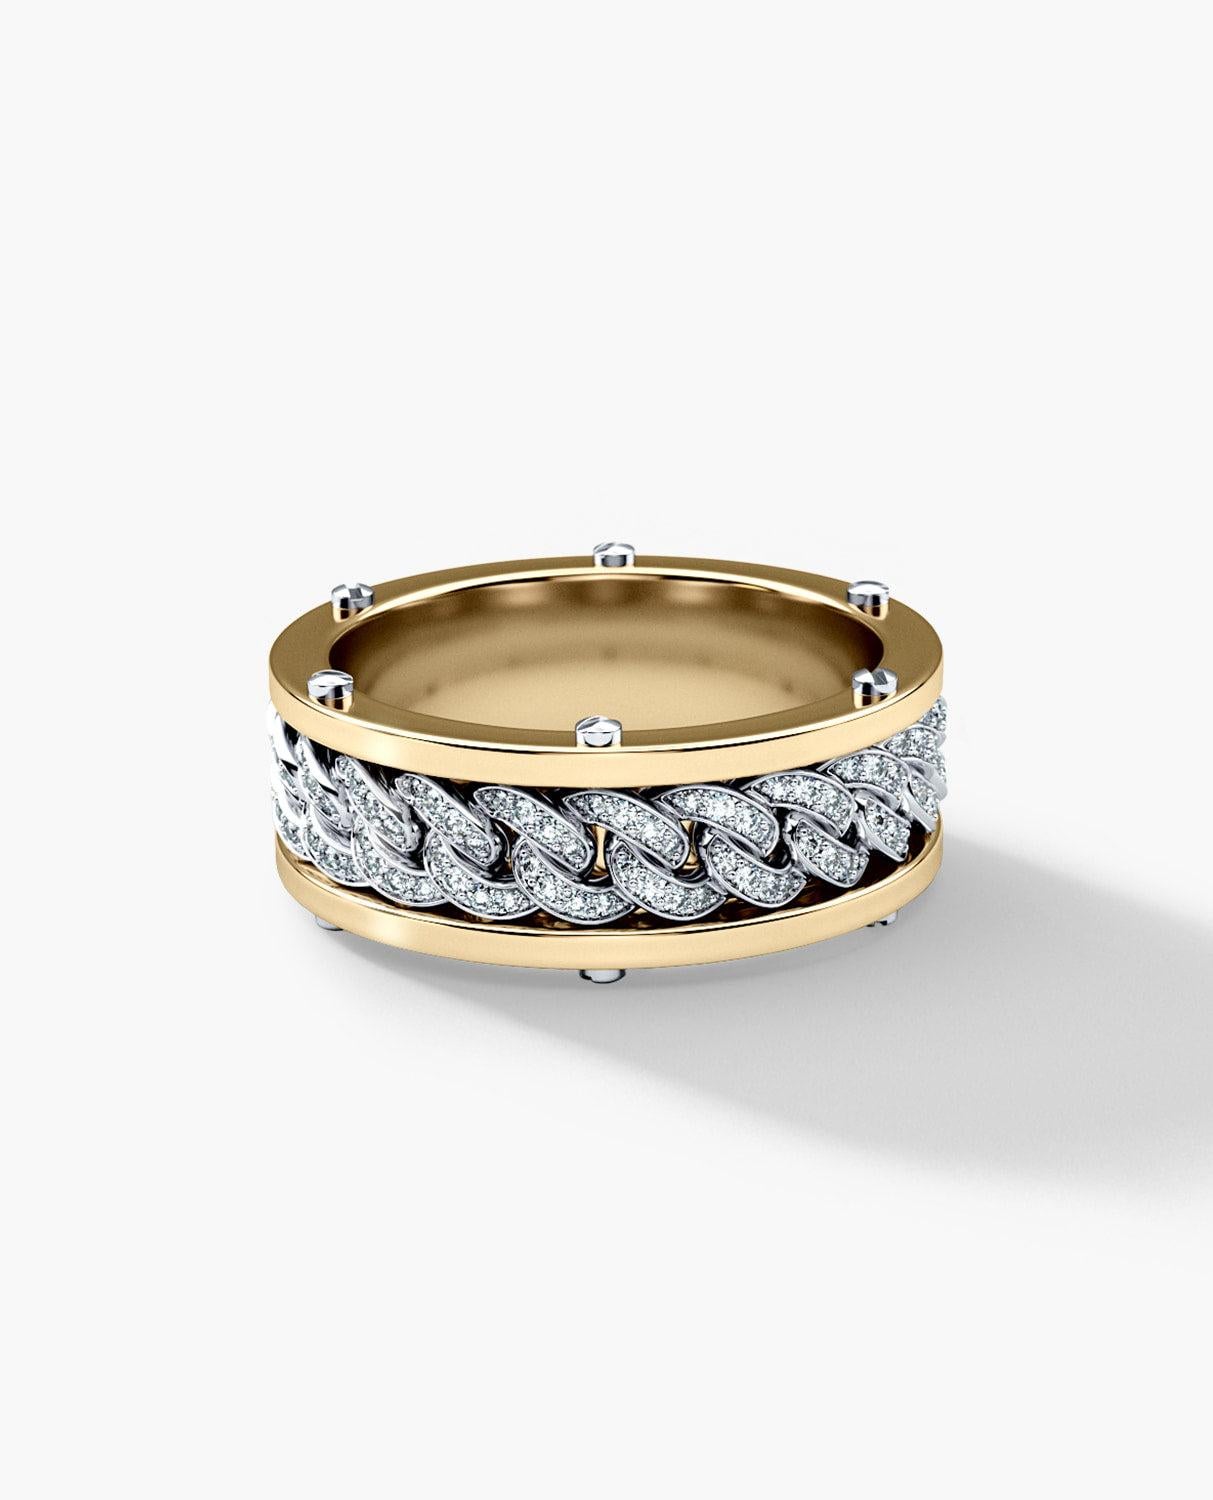 Contemporary KENSINGTON Two-Tone 14k Yellow & White Gold Ring with 0.65ct Diamonds